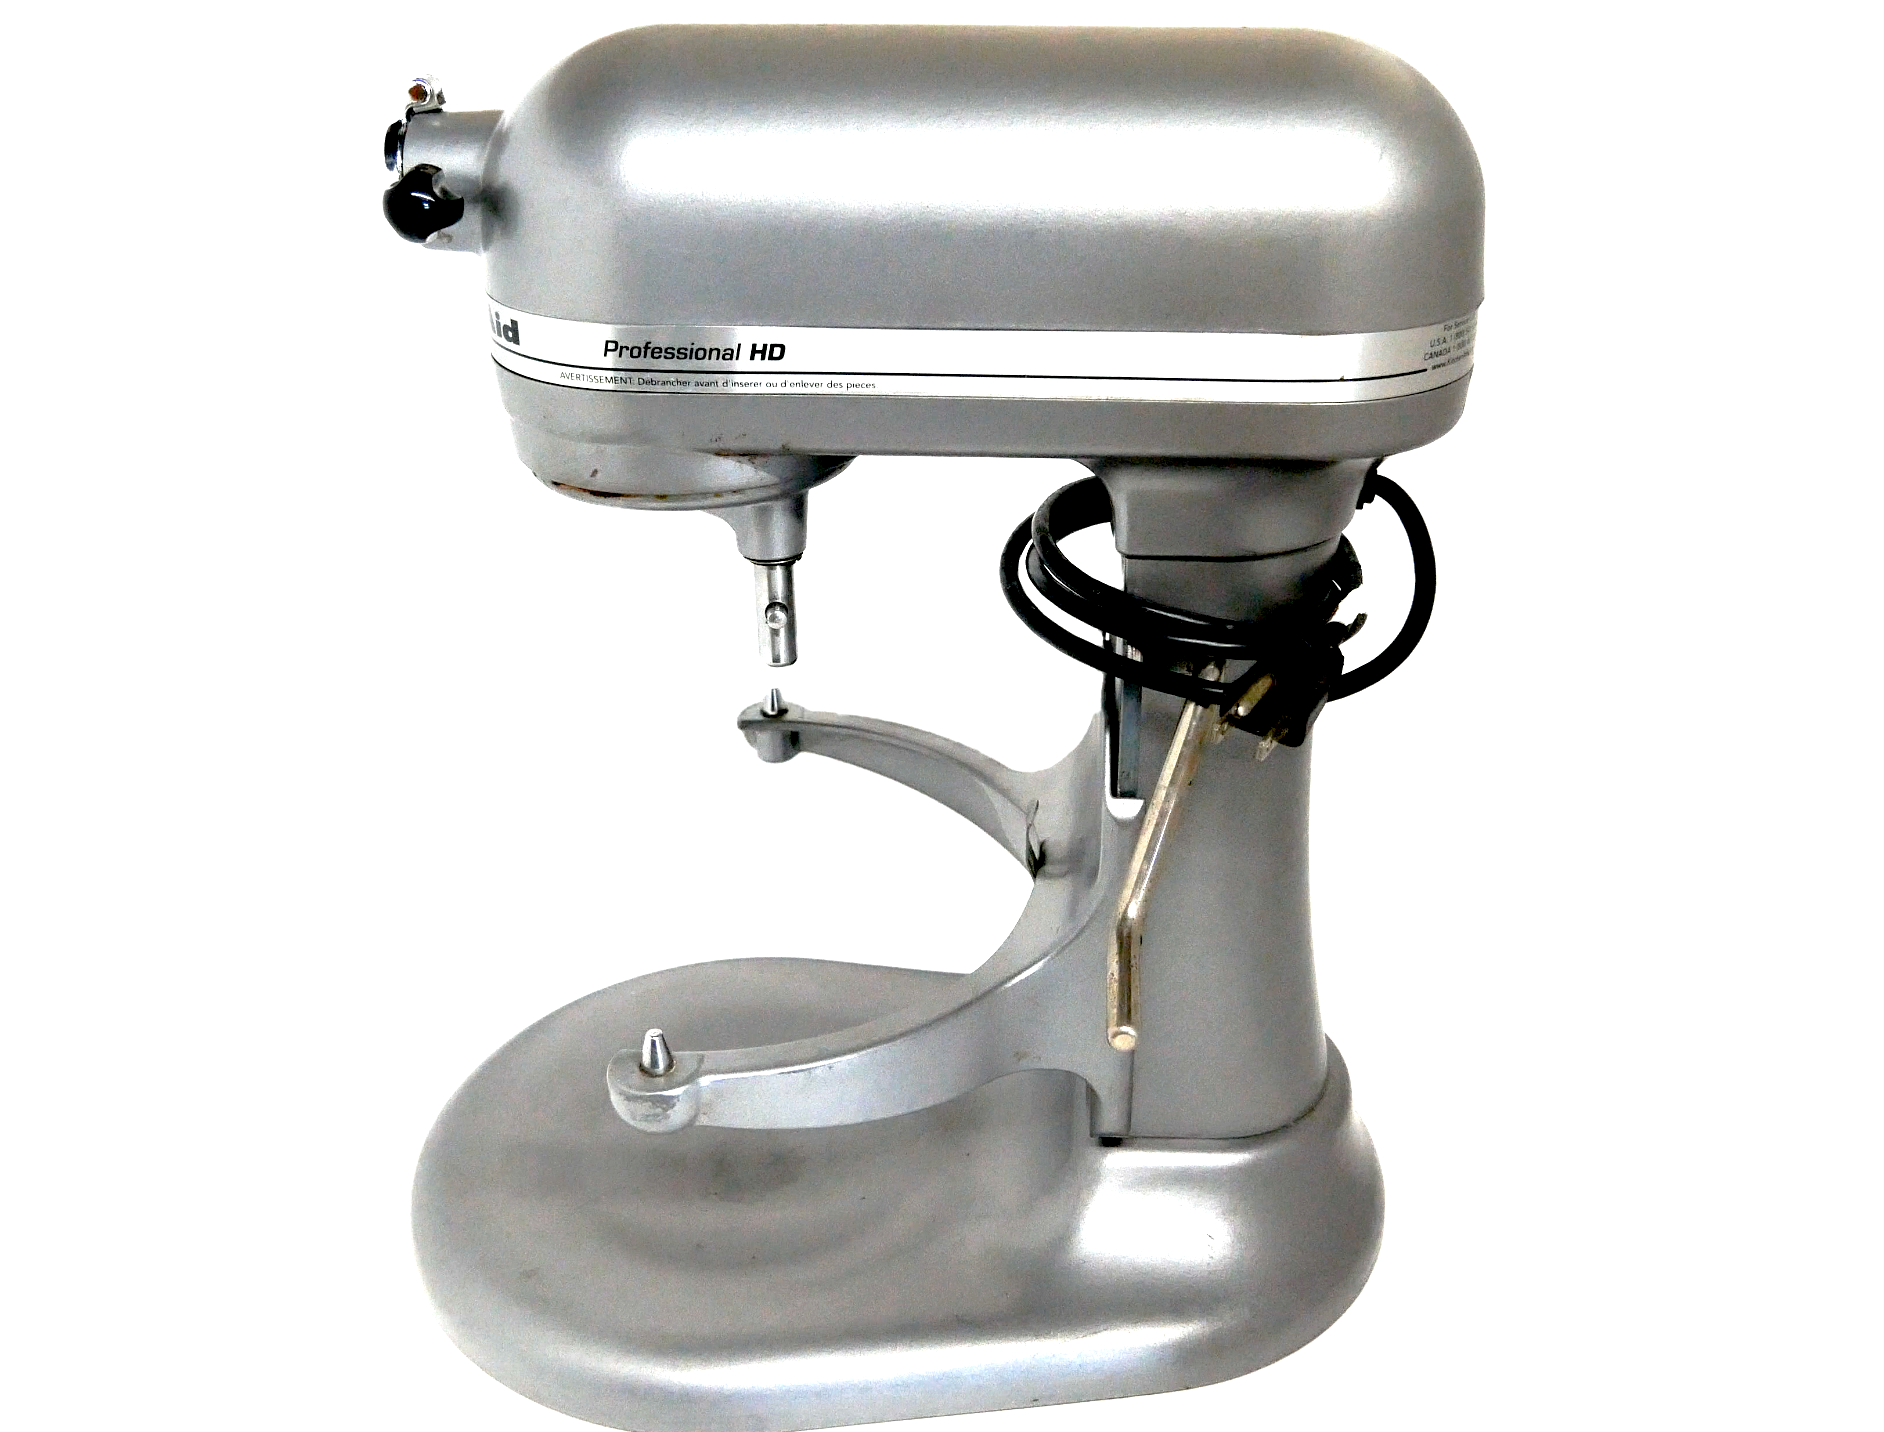 Refurbished Professional HD™ Series Bowl-Lift Stand Mixer